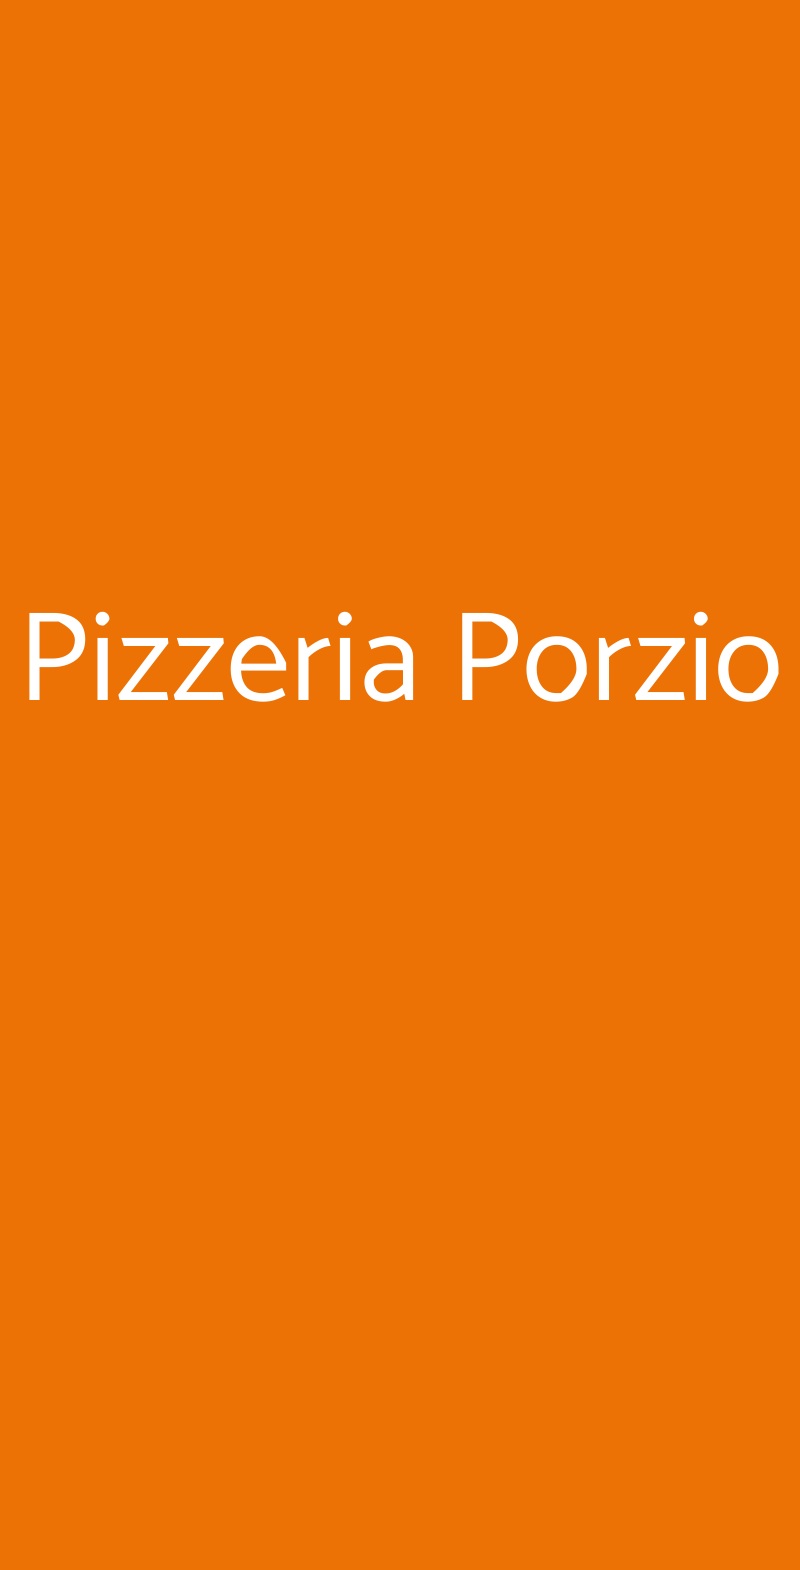 Pizzeria Porzio Napoli menù 1 pagina